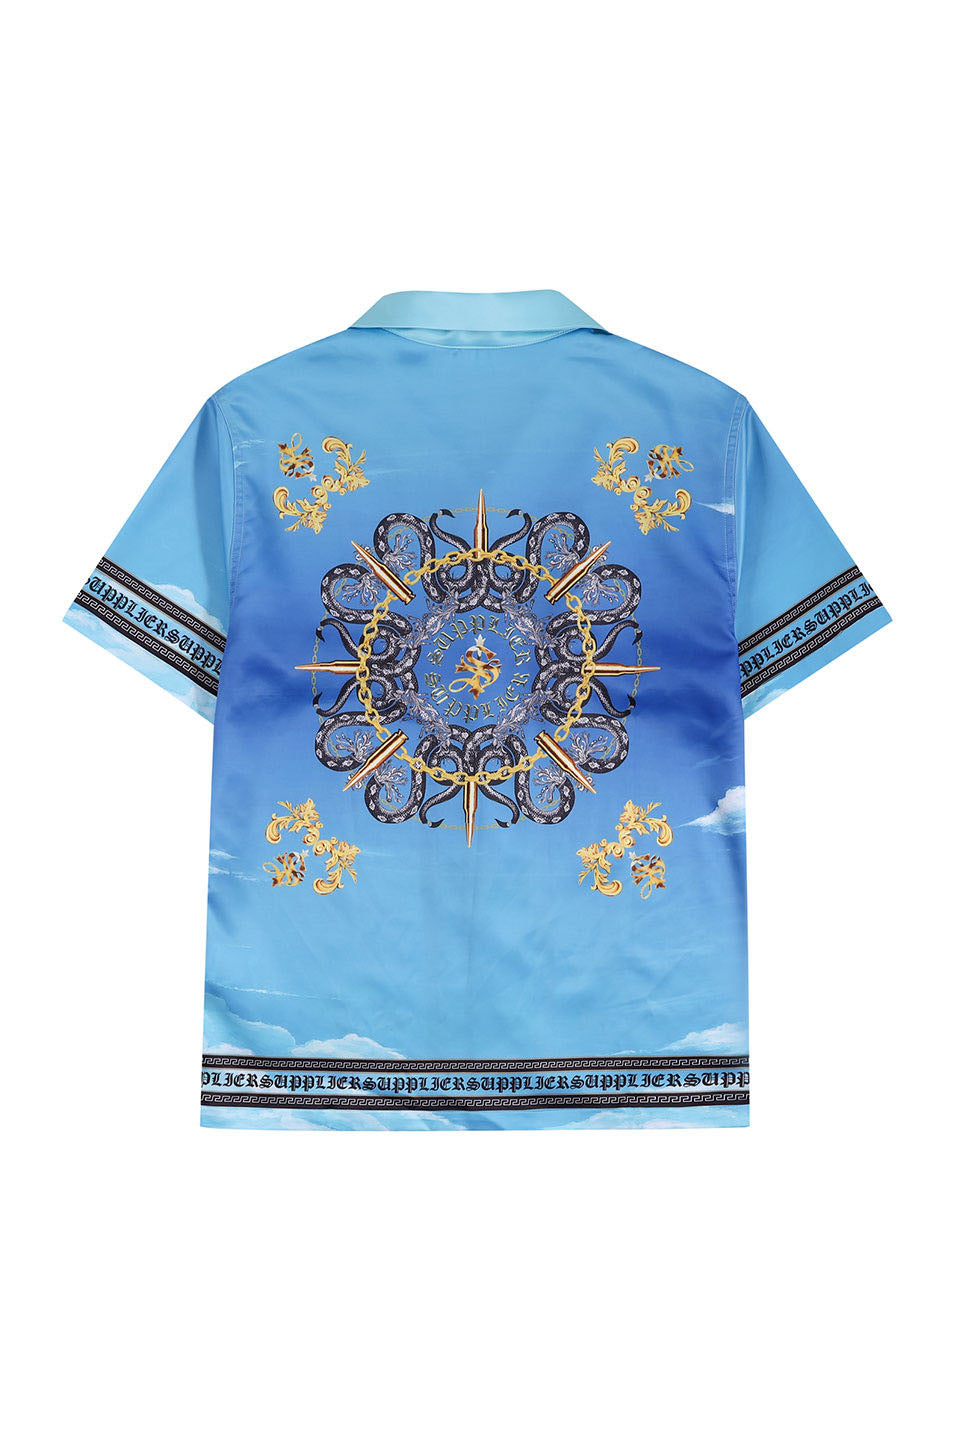 Baroque Cross Shirt